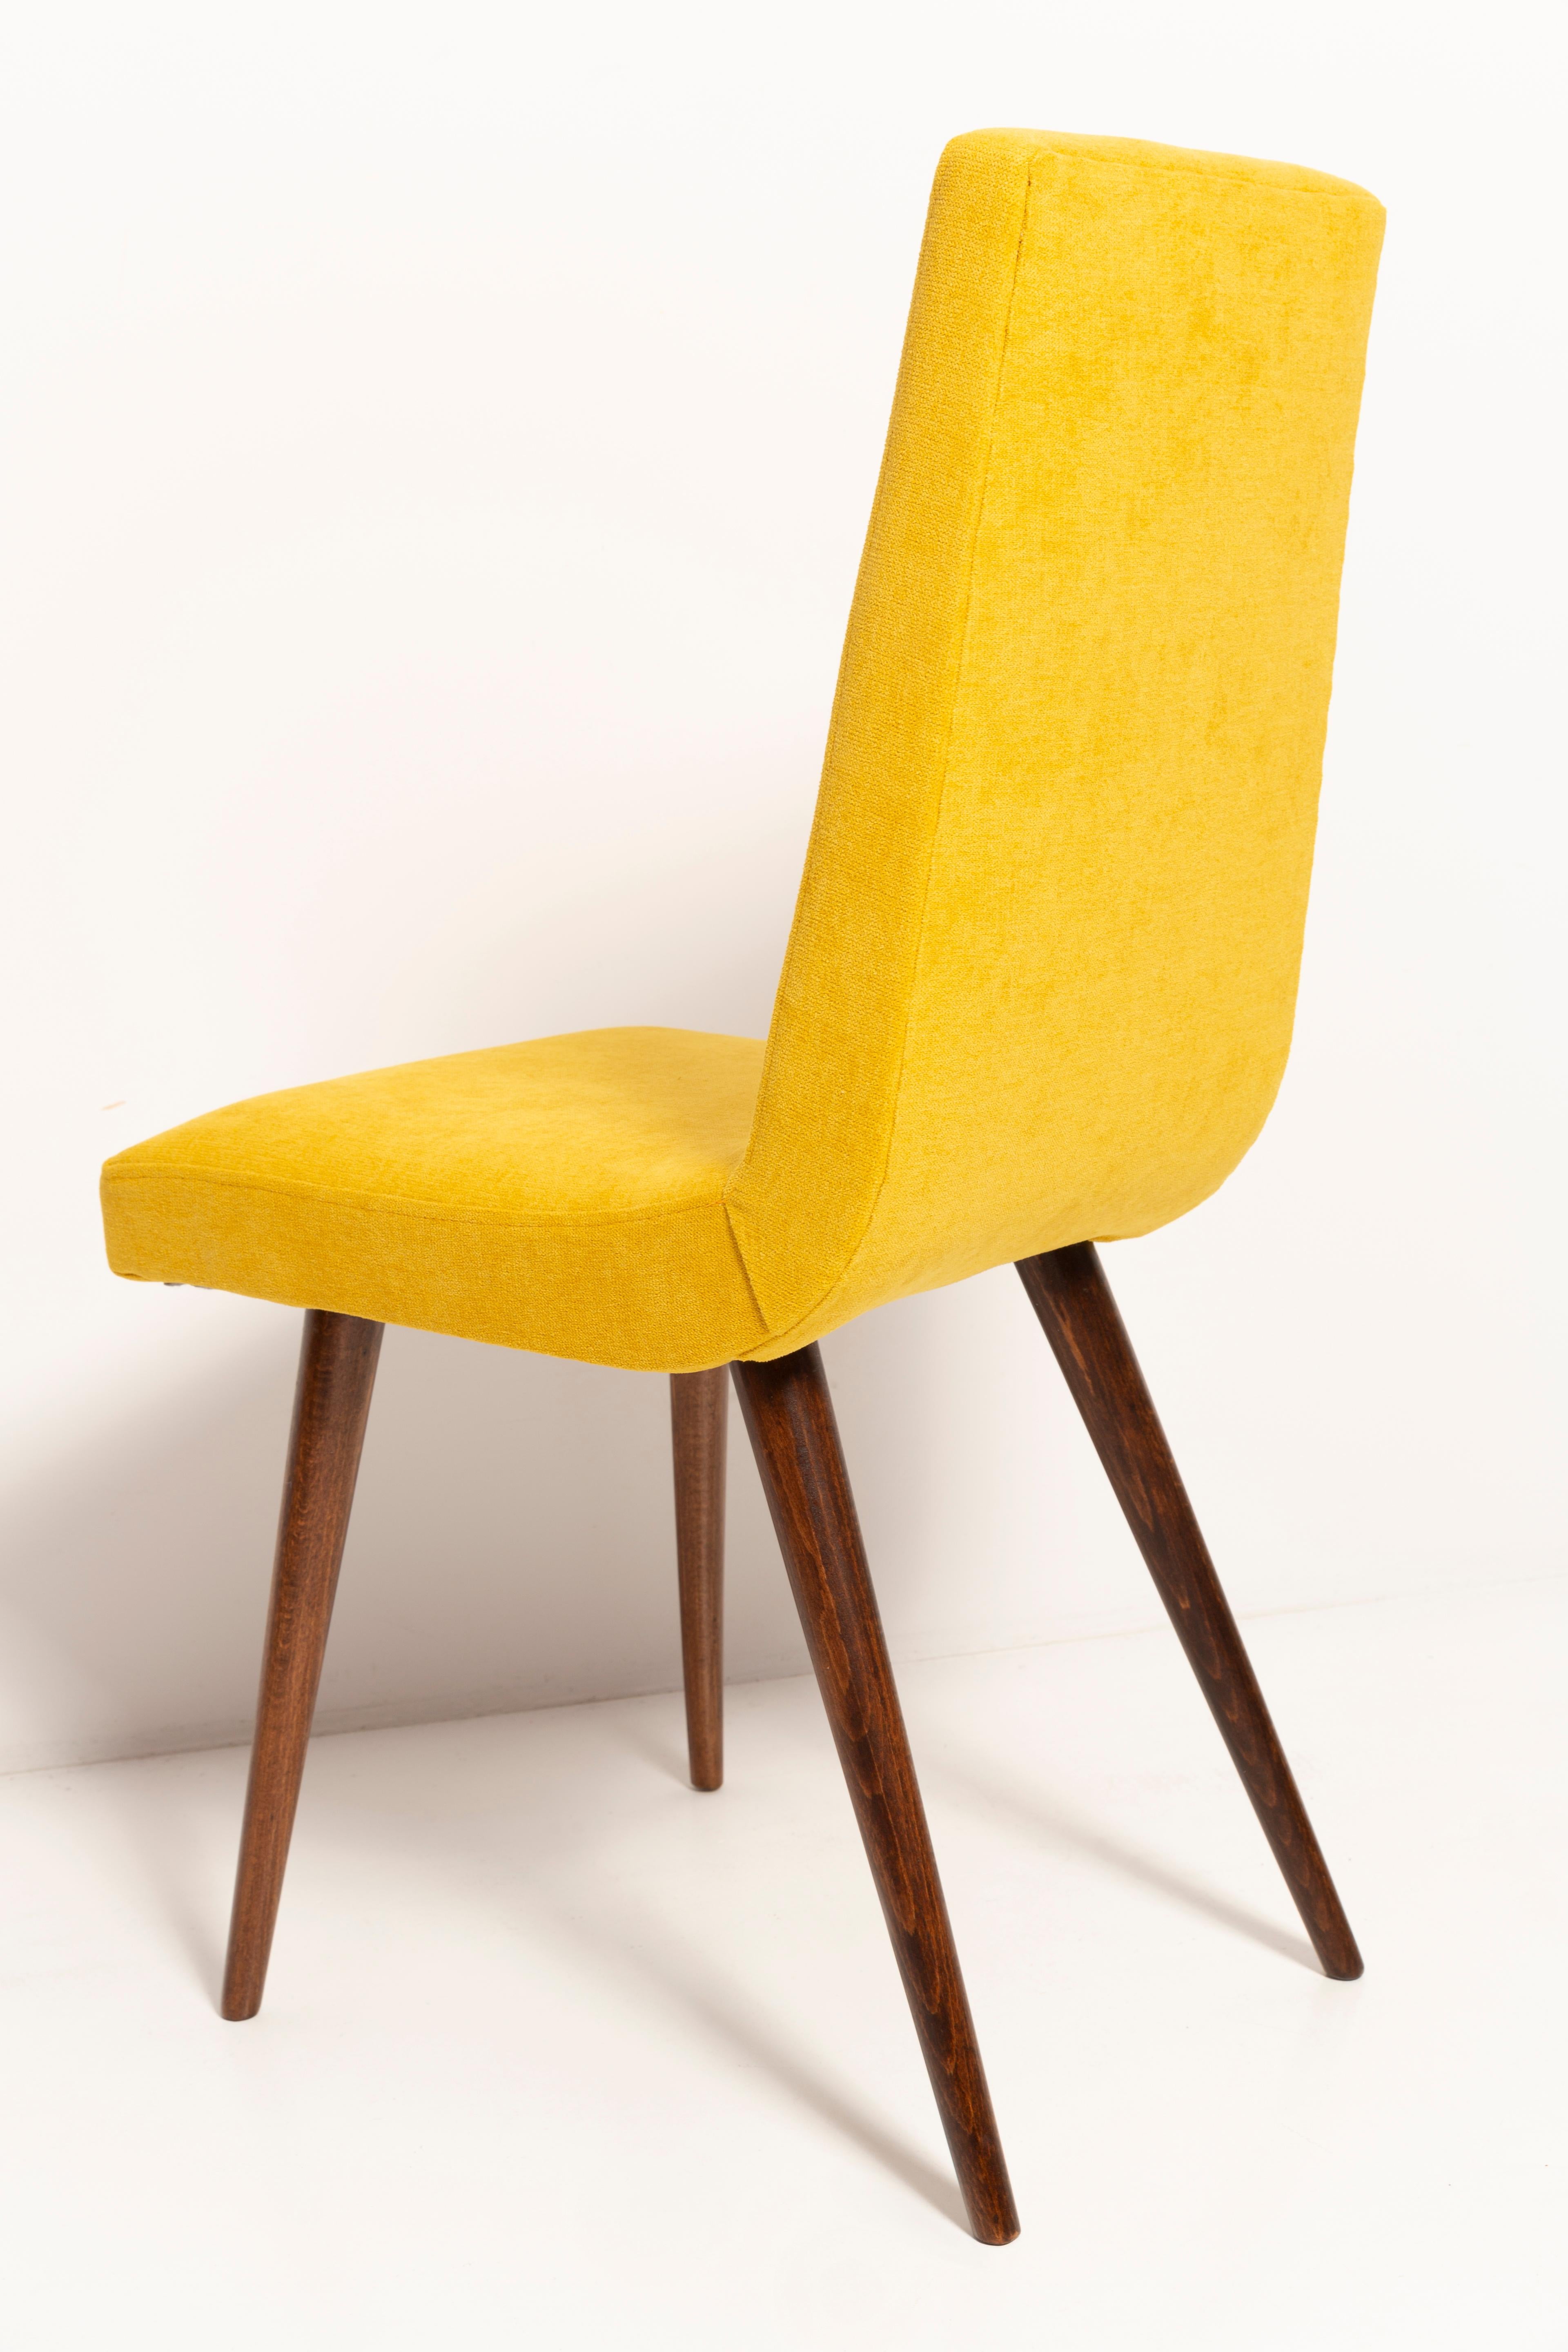 20th Century Mustard Yellow Wool Chair, Rajmund Halas, Europe, 1960s For Sale 1